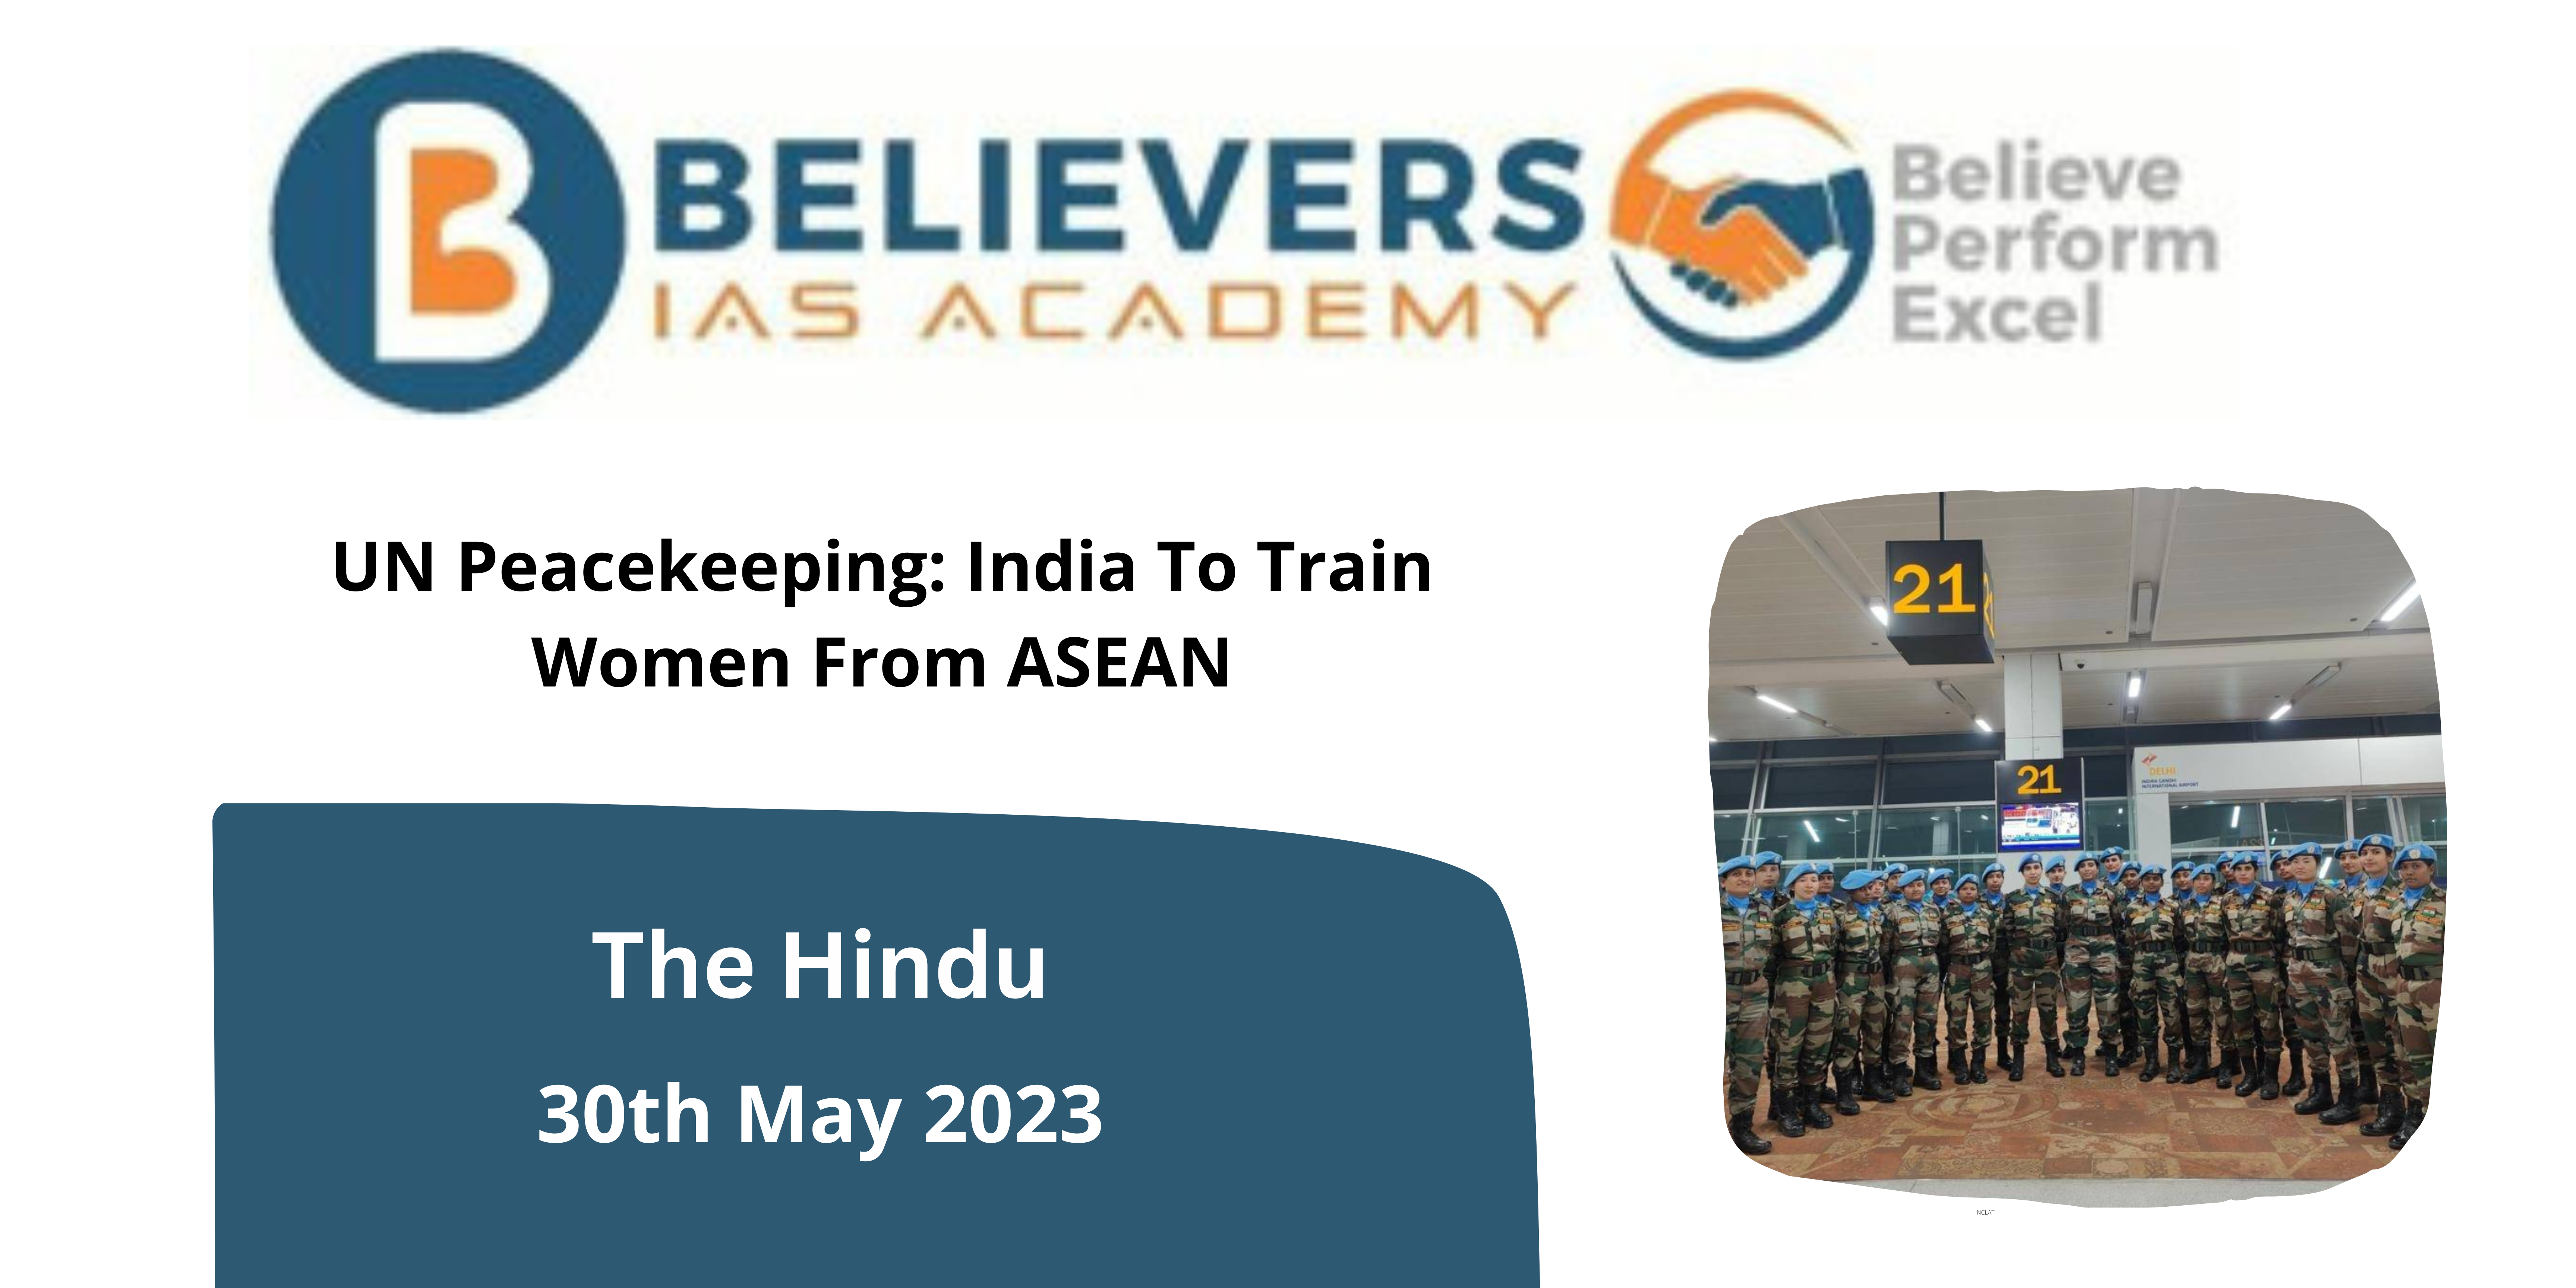 UN Peacekeeping: India To Train Women From ASEAN